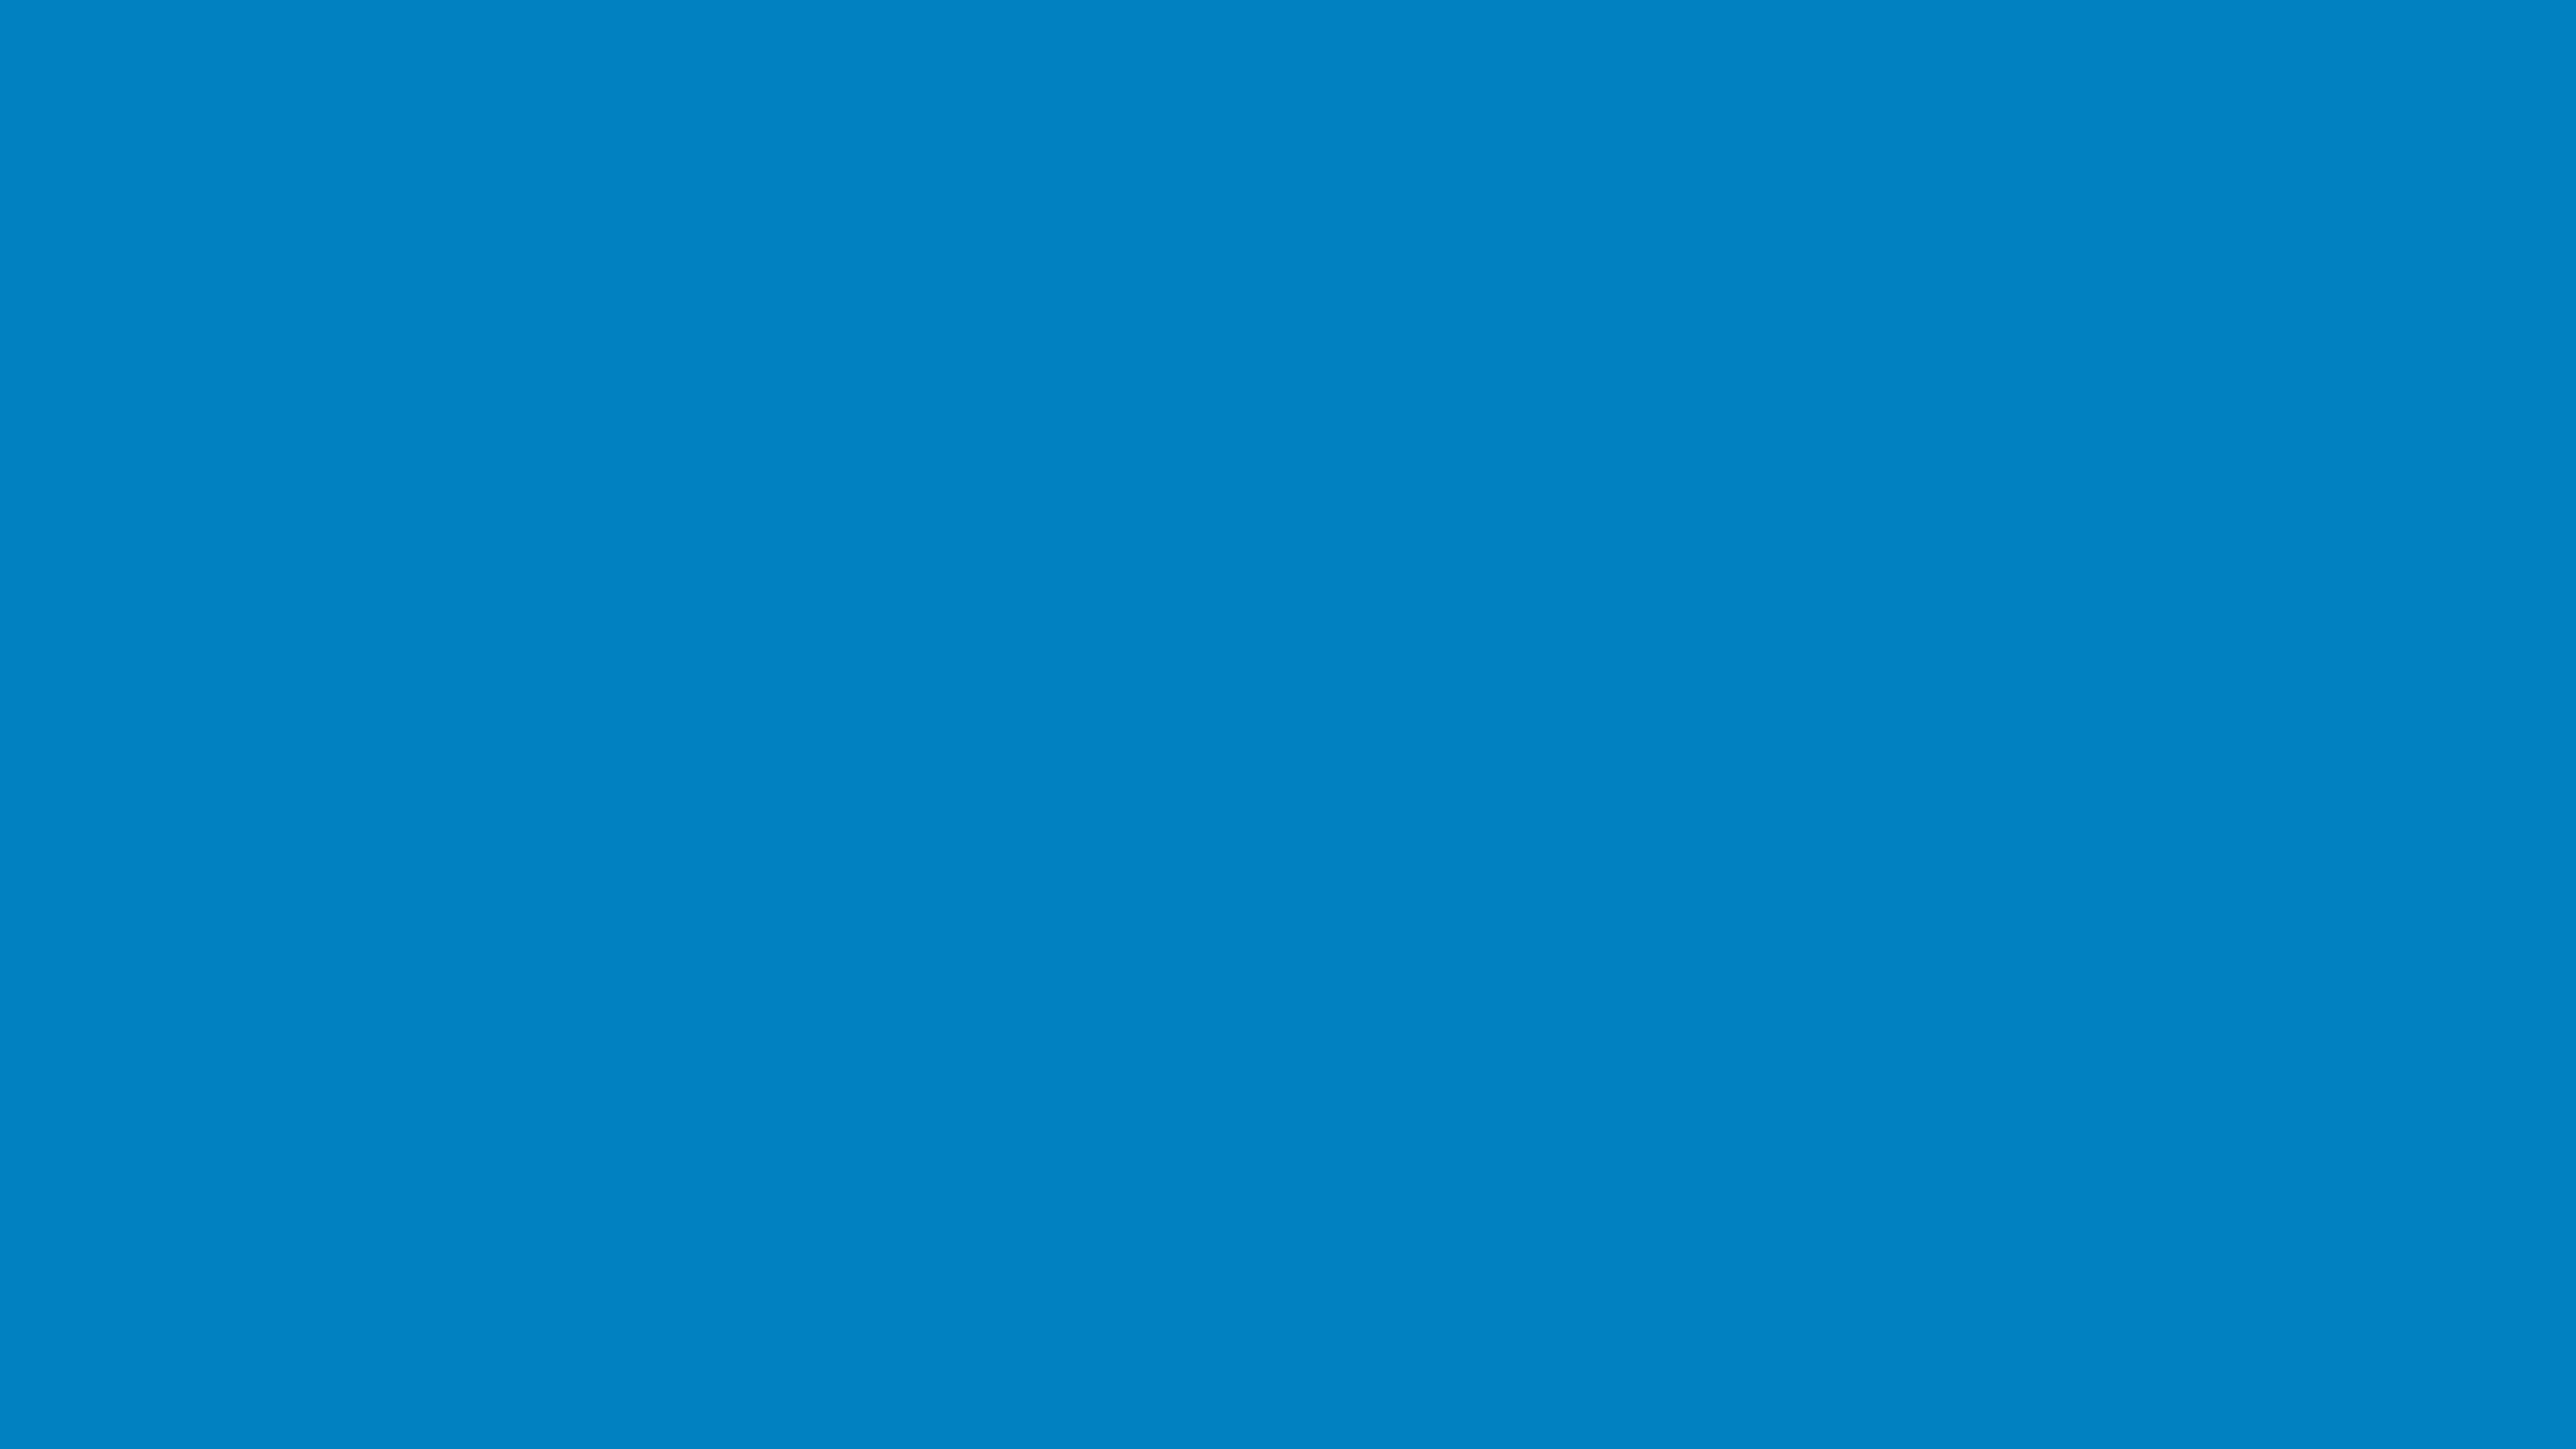 Honolulu Blue ( similar ) Color | 0181c1 information | Hsl | Rgb | Pantone